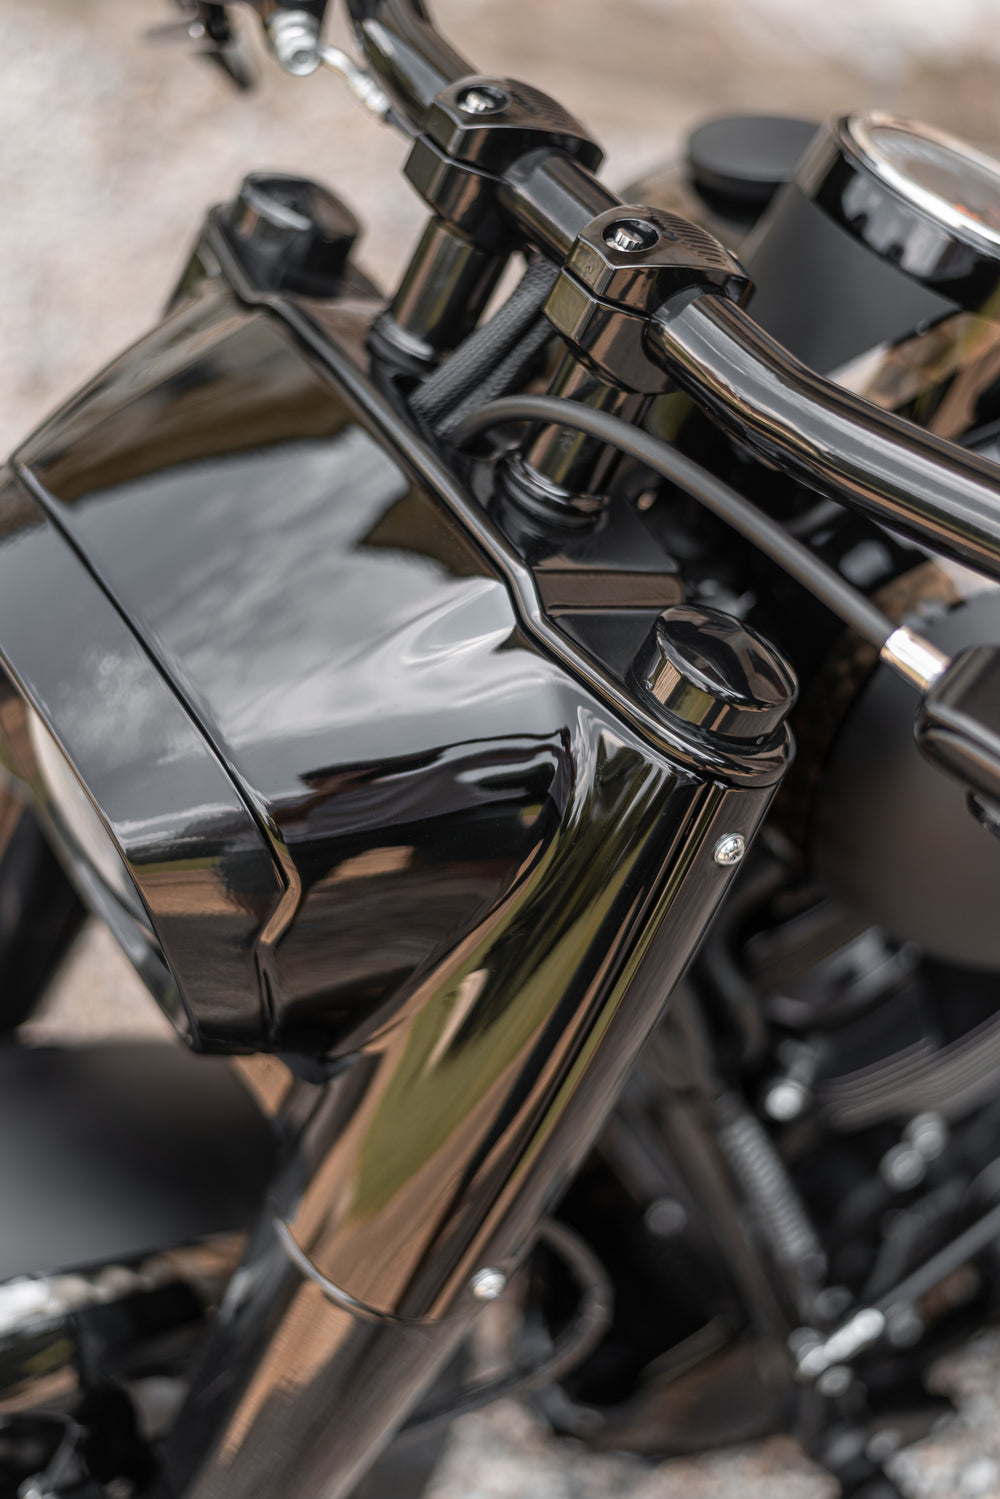 Zoomed Harley Davidson motorcycle with Killer Custom riser set for handlebar from above